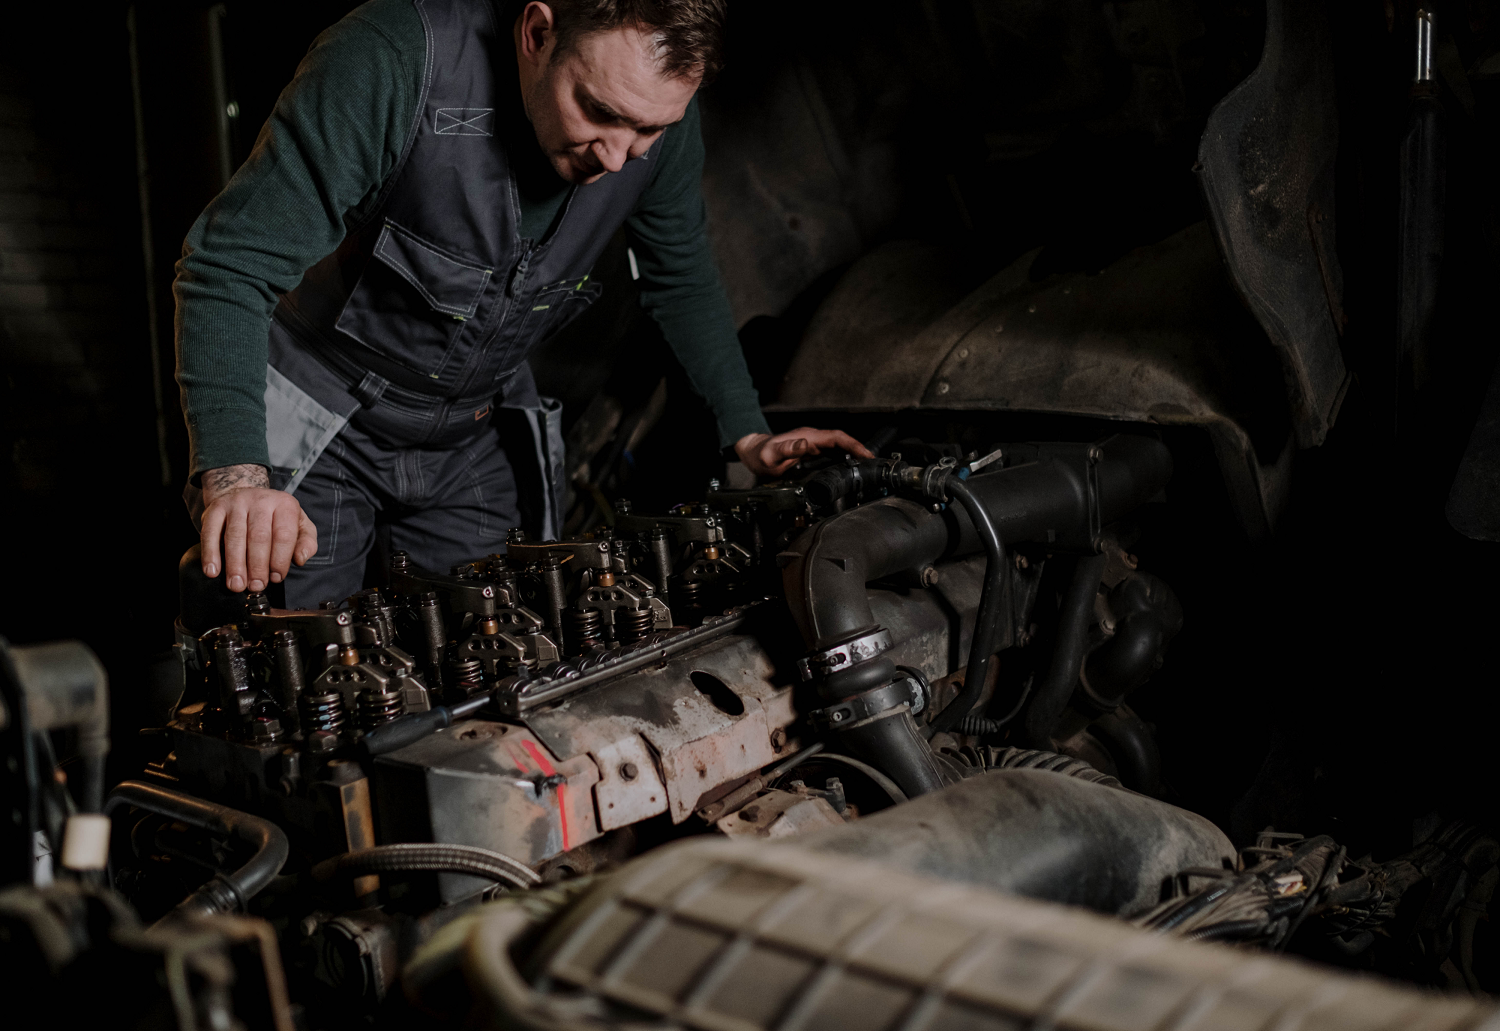 A mechanic working on a vehicle engine.